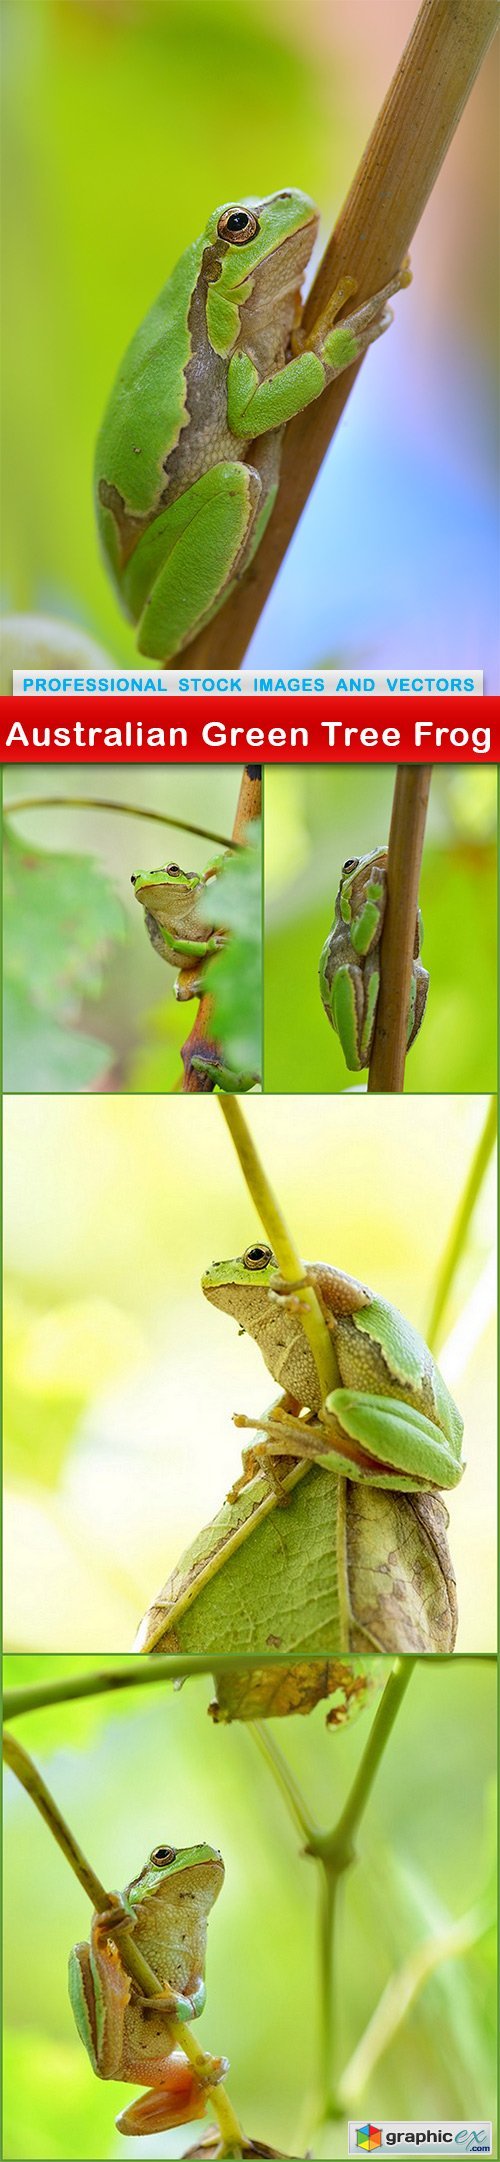 Australian Green Tree Frog - 5 UHQ JPEG